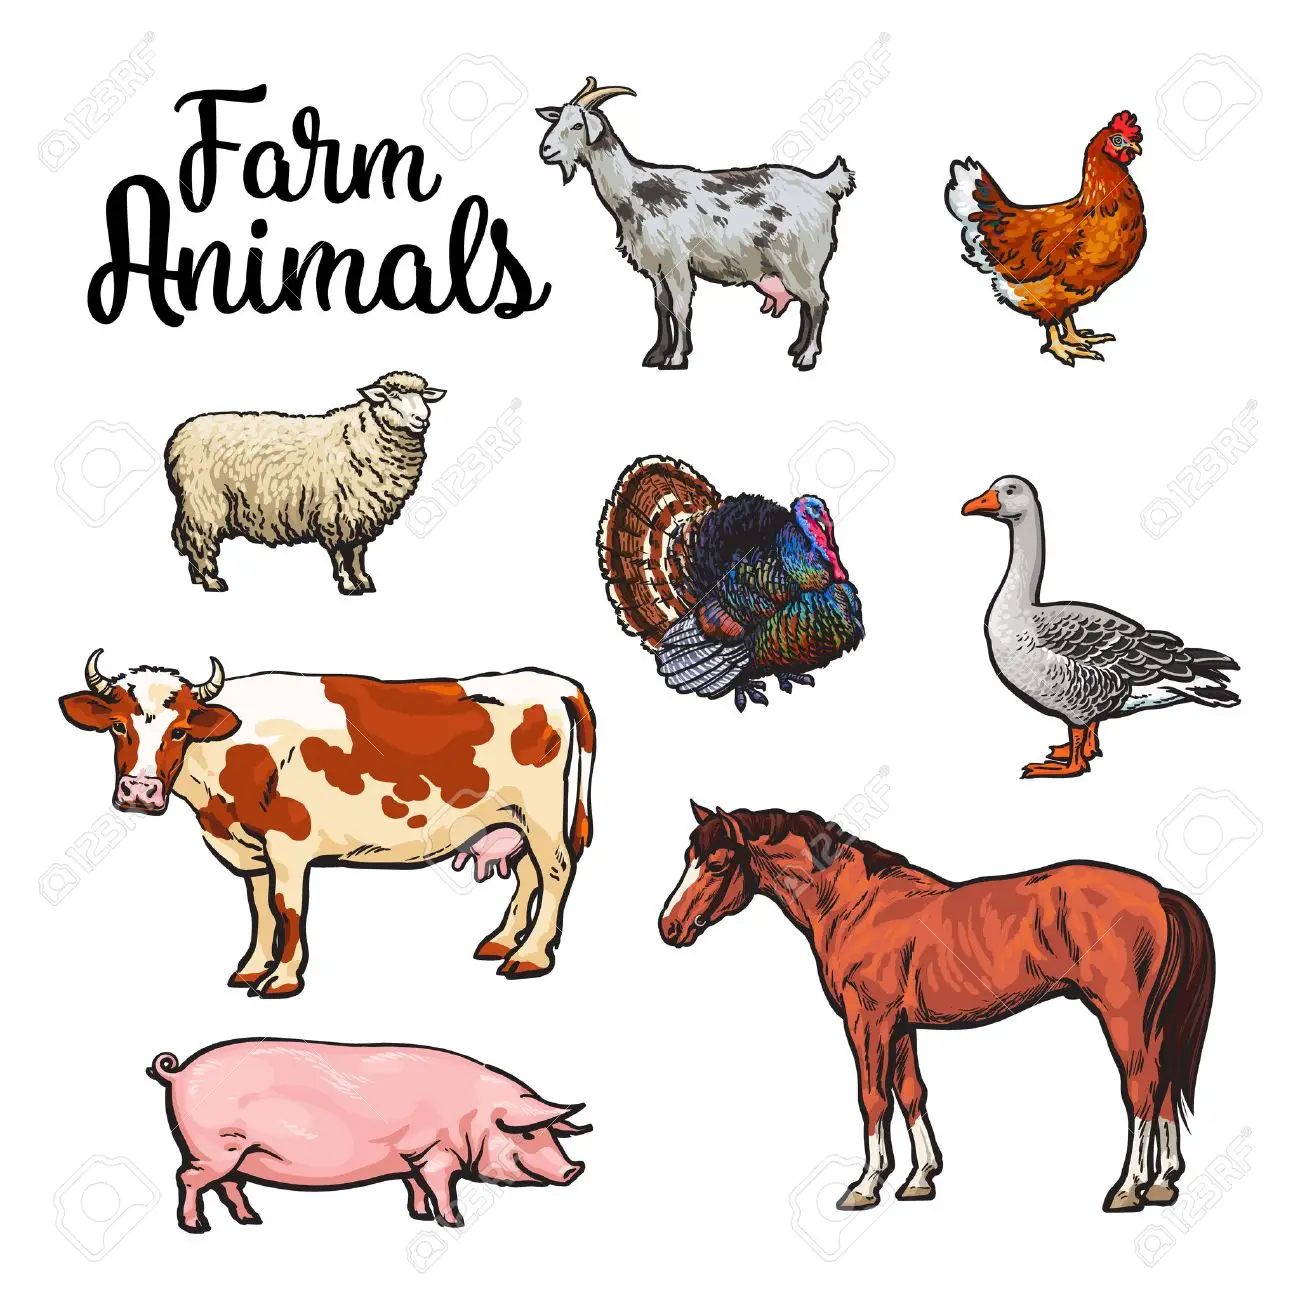 Types of livestock kept by farmers in Zambia